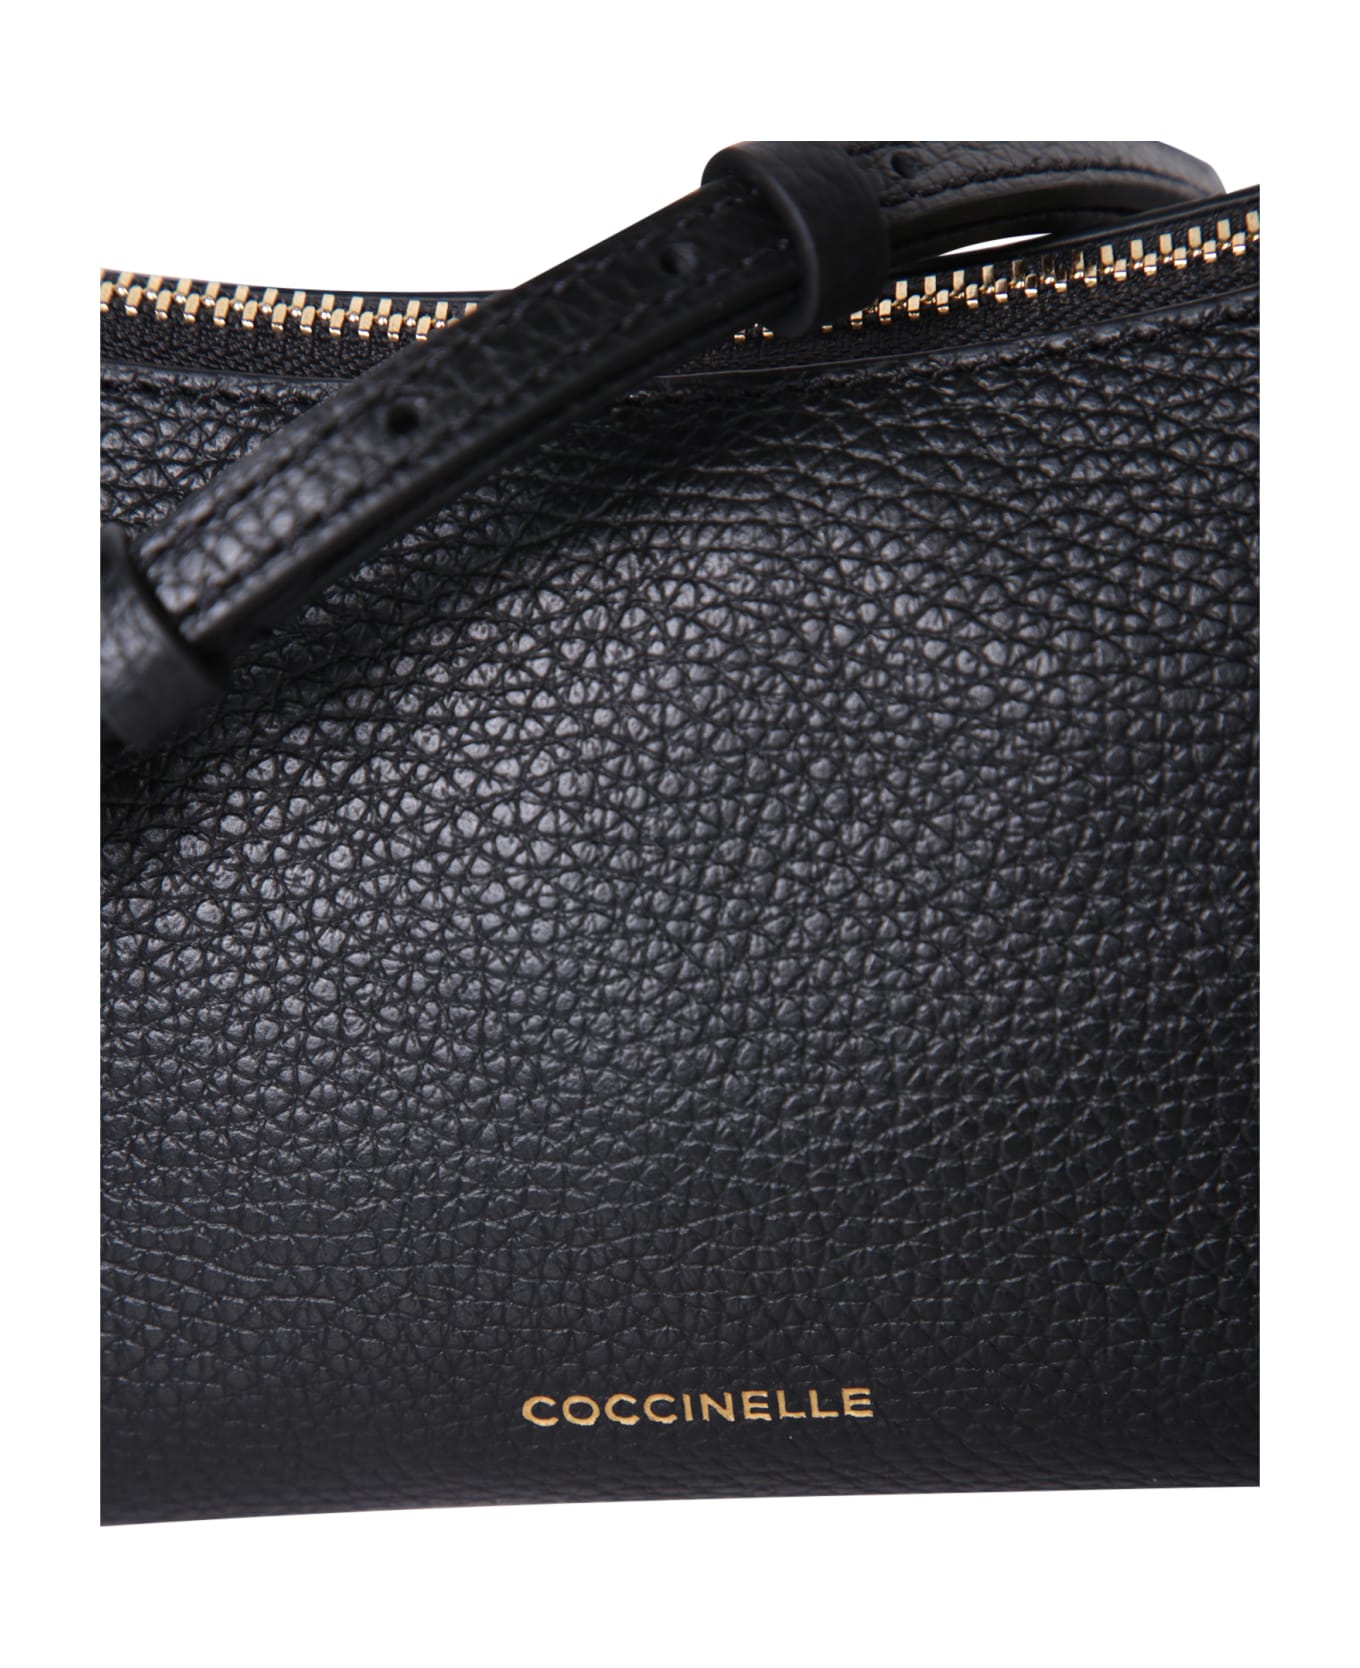 Coccinelle Aura Black Leather Bag - Black